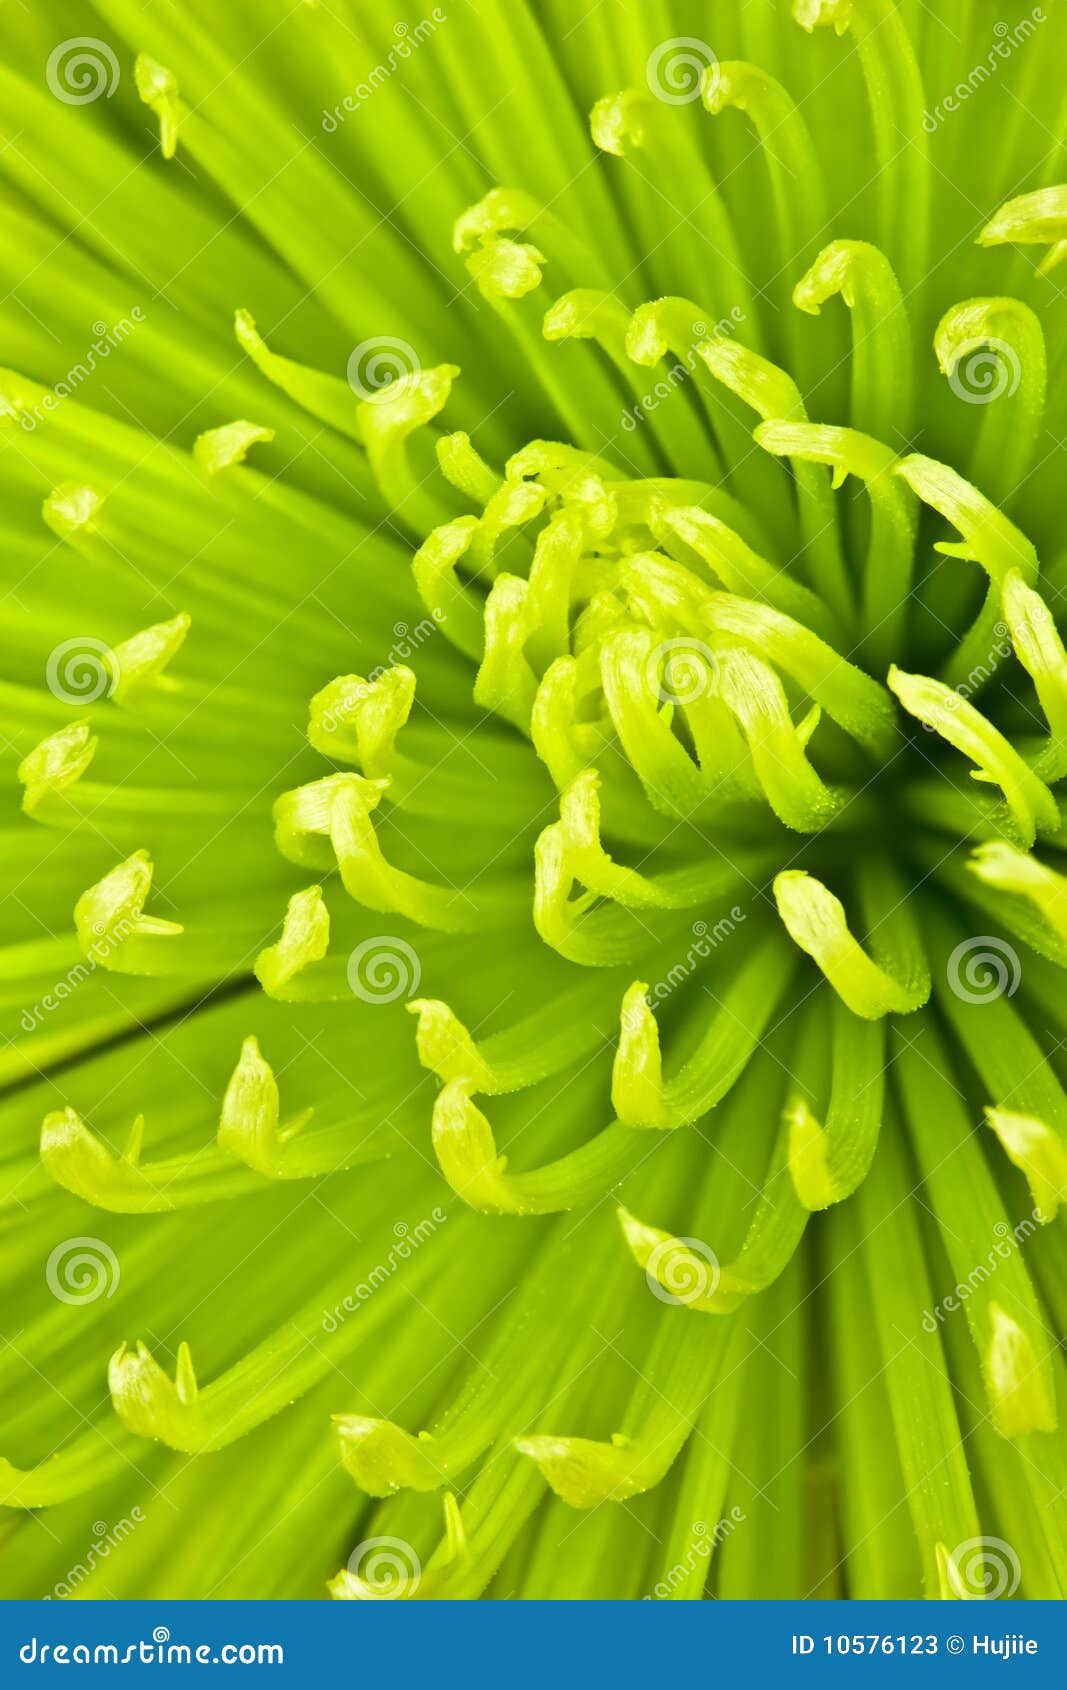 chartreuse chrysanthemum